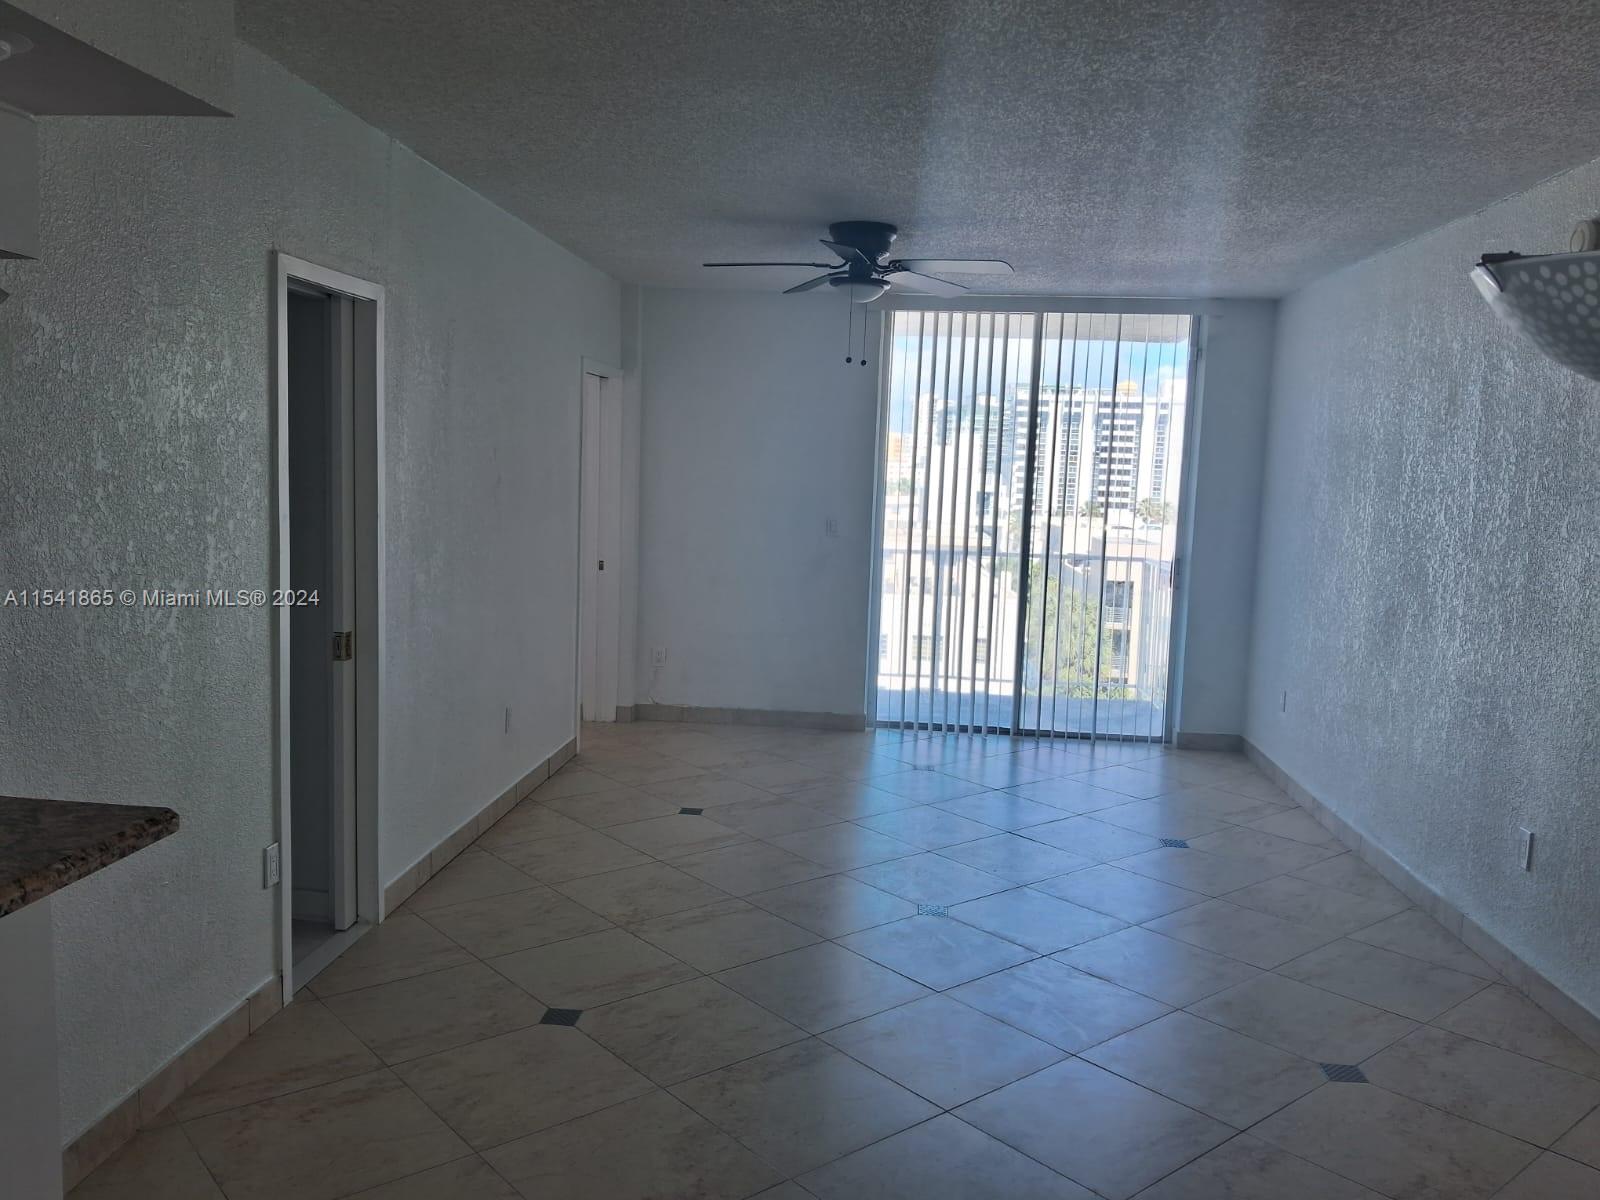 Rental Property at 2829 Indian Creek Dr 706, Miami Beach, Miami-Dade County, Florida - Bedrooms: 2 
Bathrooms: 2  - $2,900 MO.